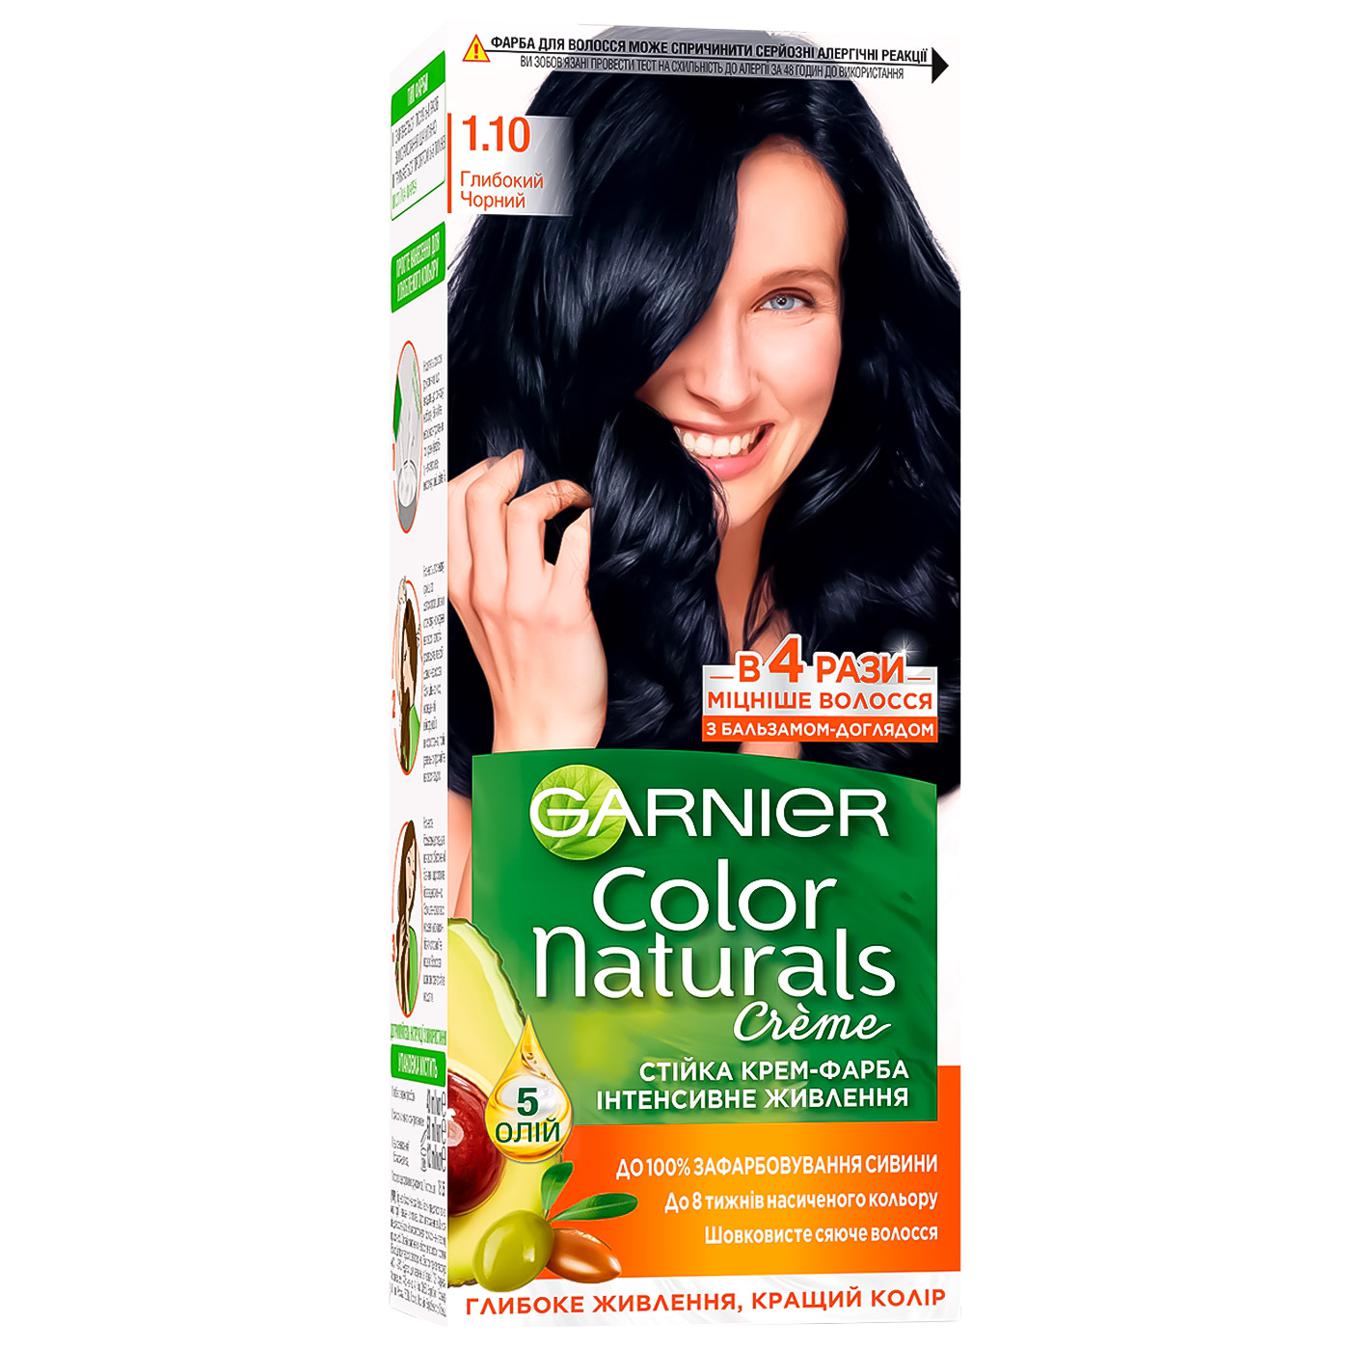 Paint cream Garnier Color Naturals for hair intensive nutrition tone 1.10